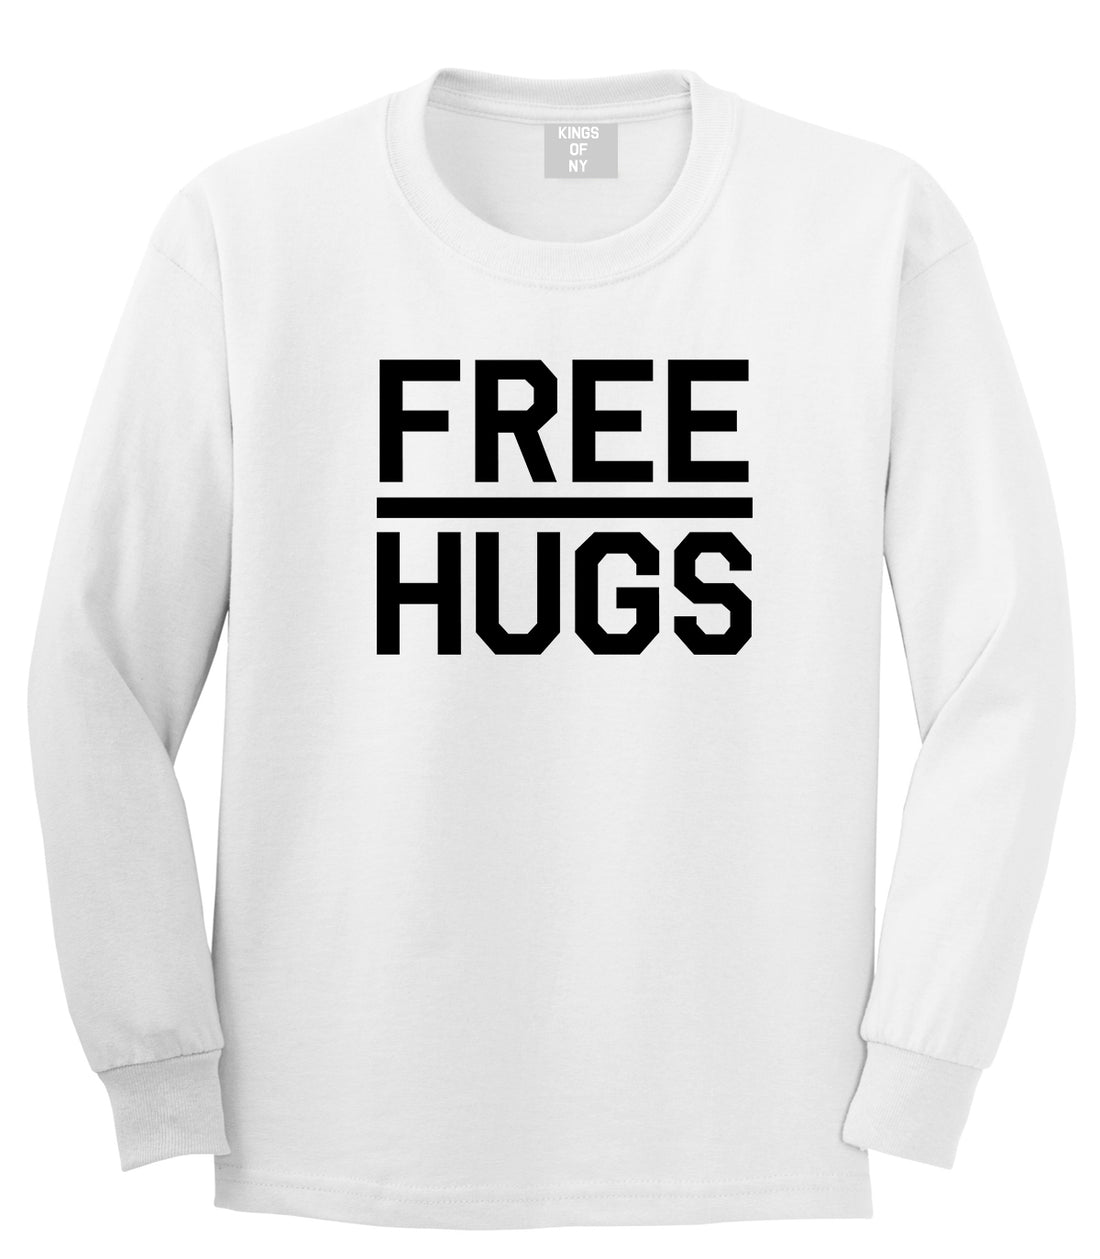 Free Hugs Funny Mens White Long Sleeve T-Shirt by KINGS OF NY